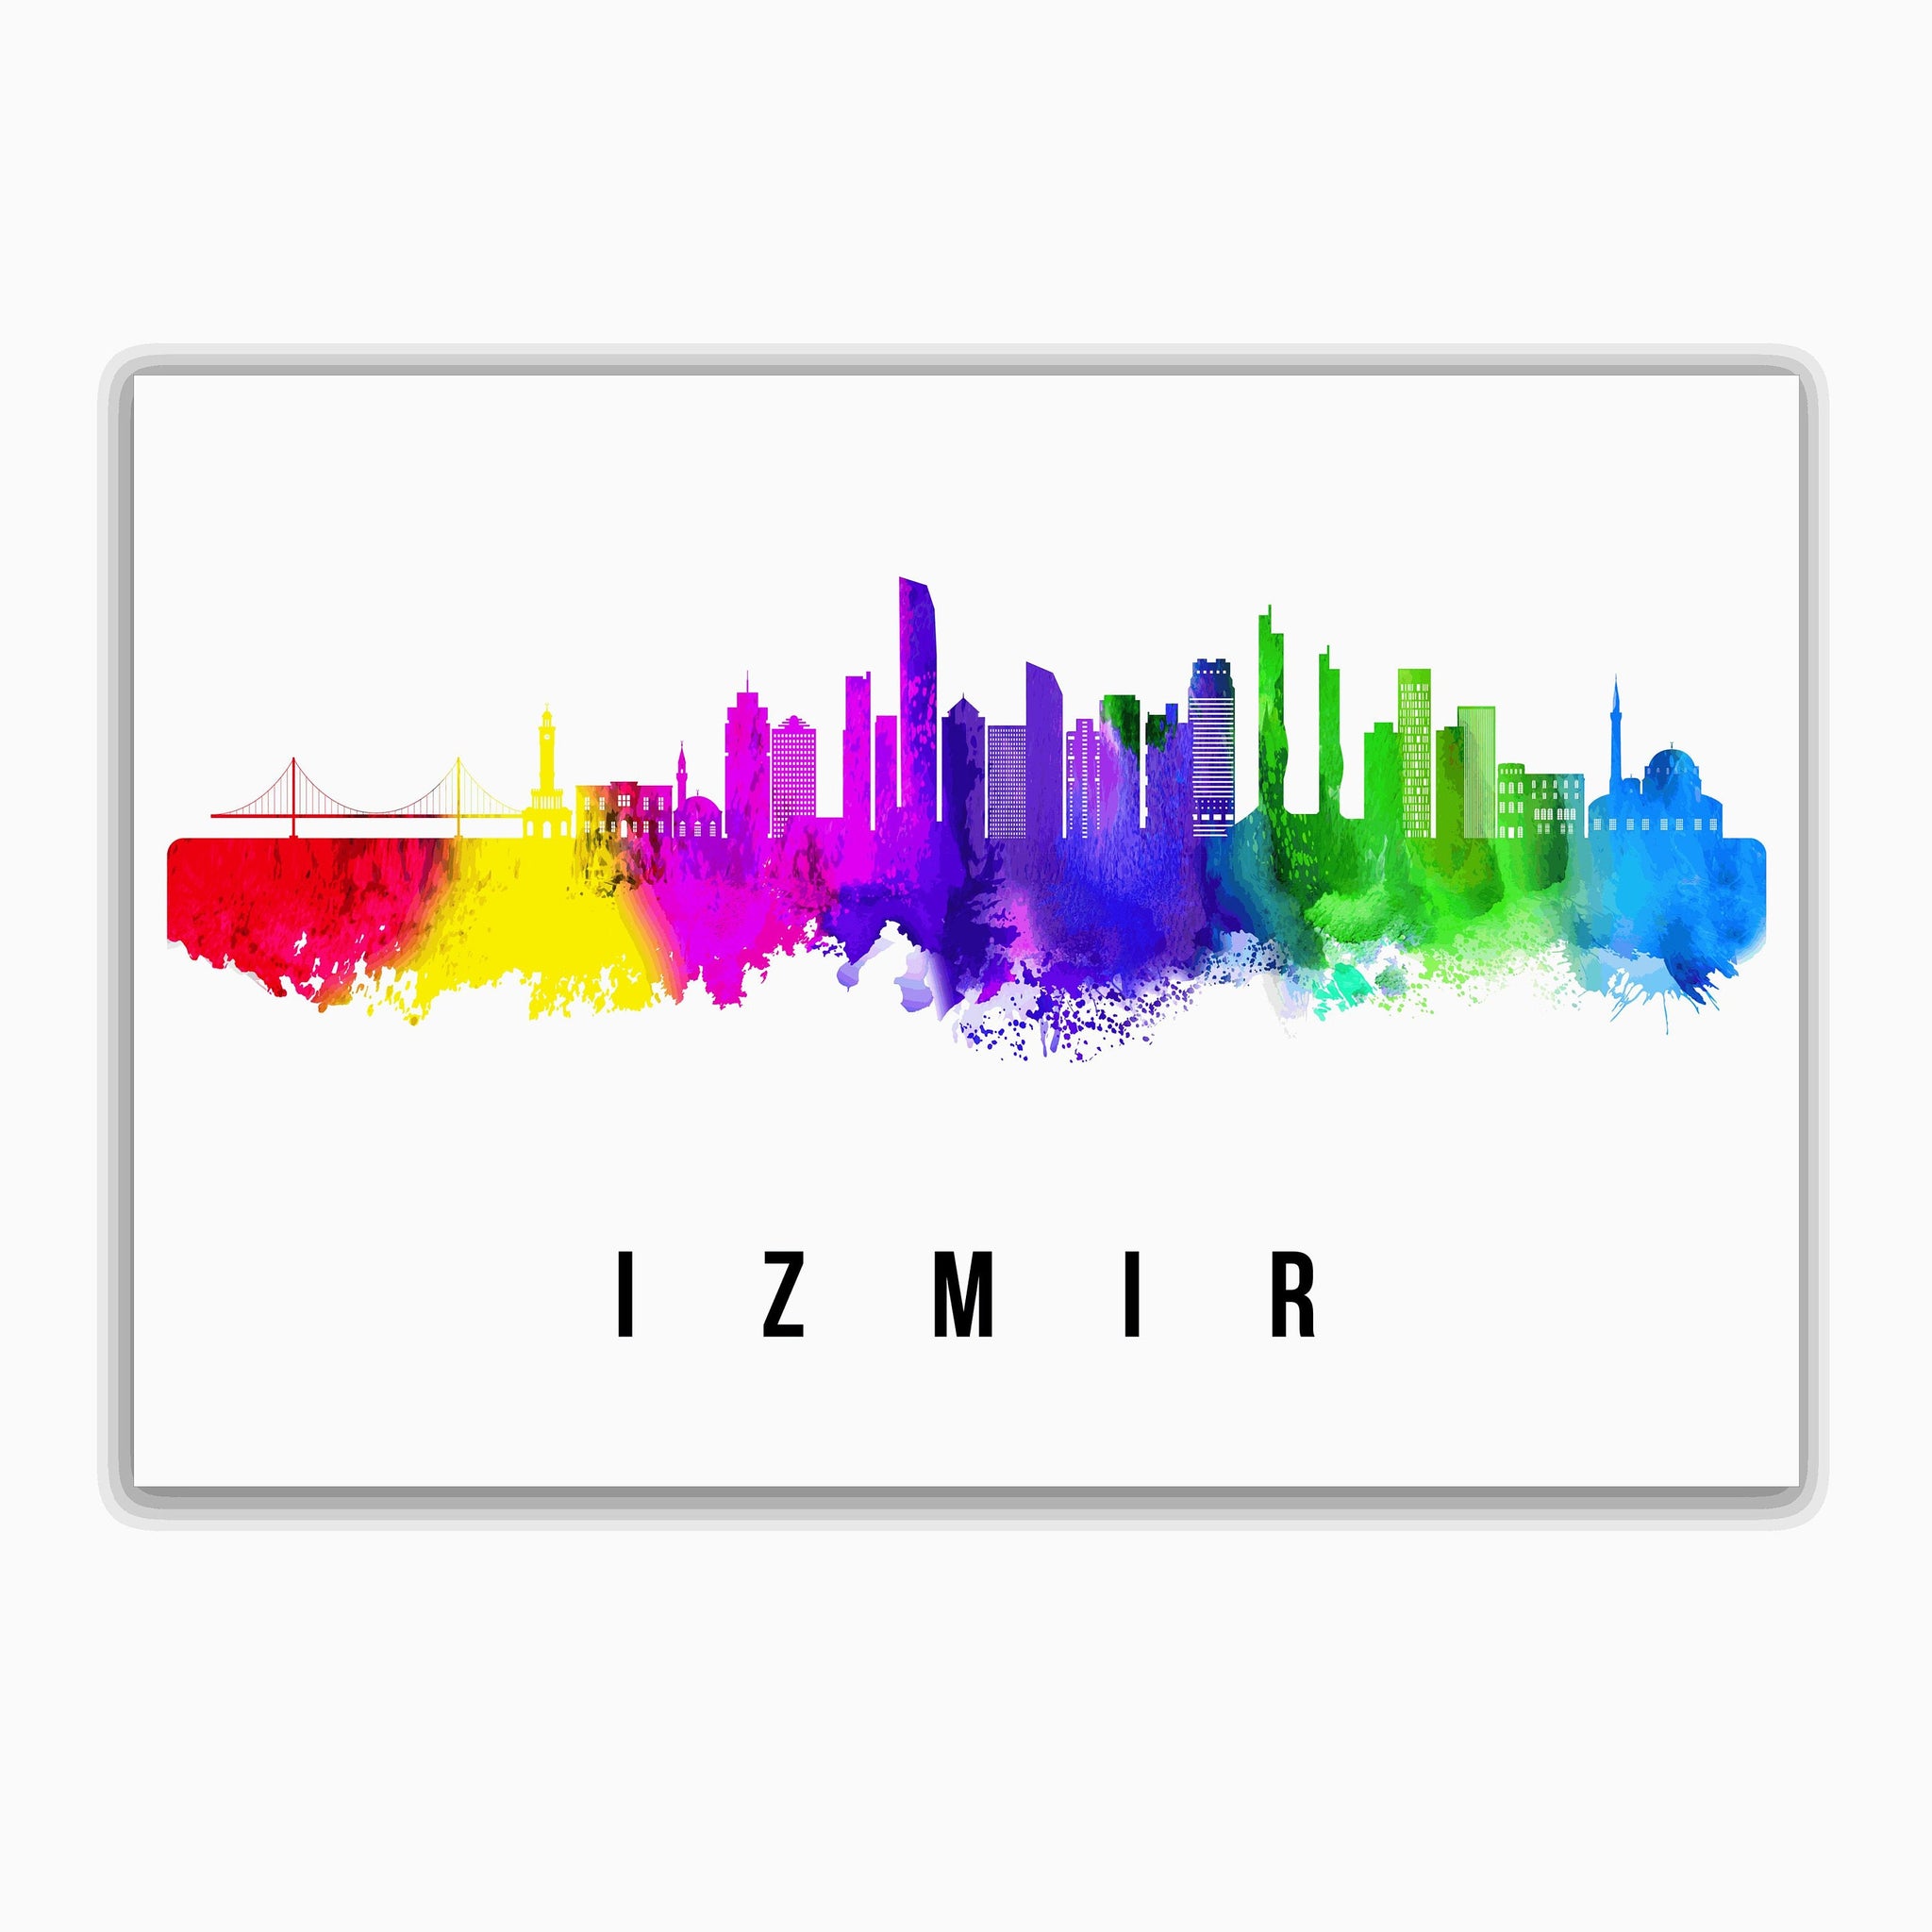 IZMIR - TURKEY Poster, Skyline Poster Cityscape and Landmark Izmir City Illustration Home Wall Art, Office Decor